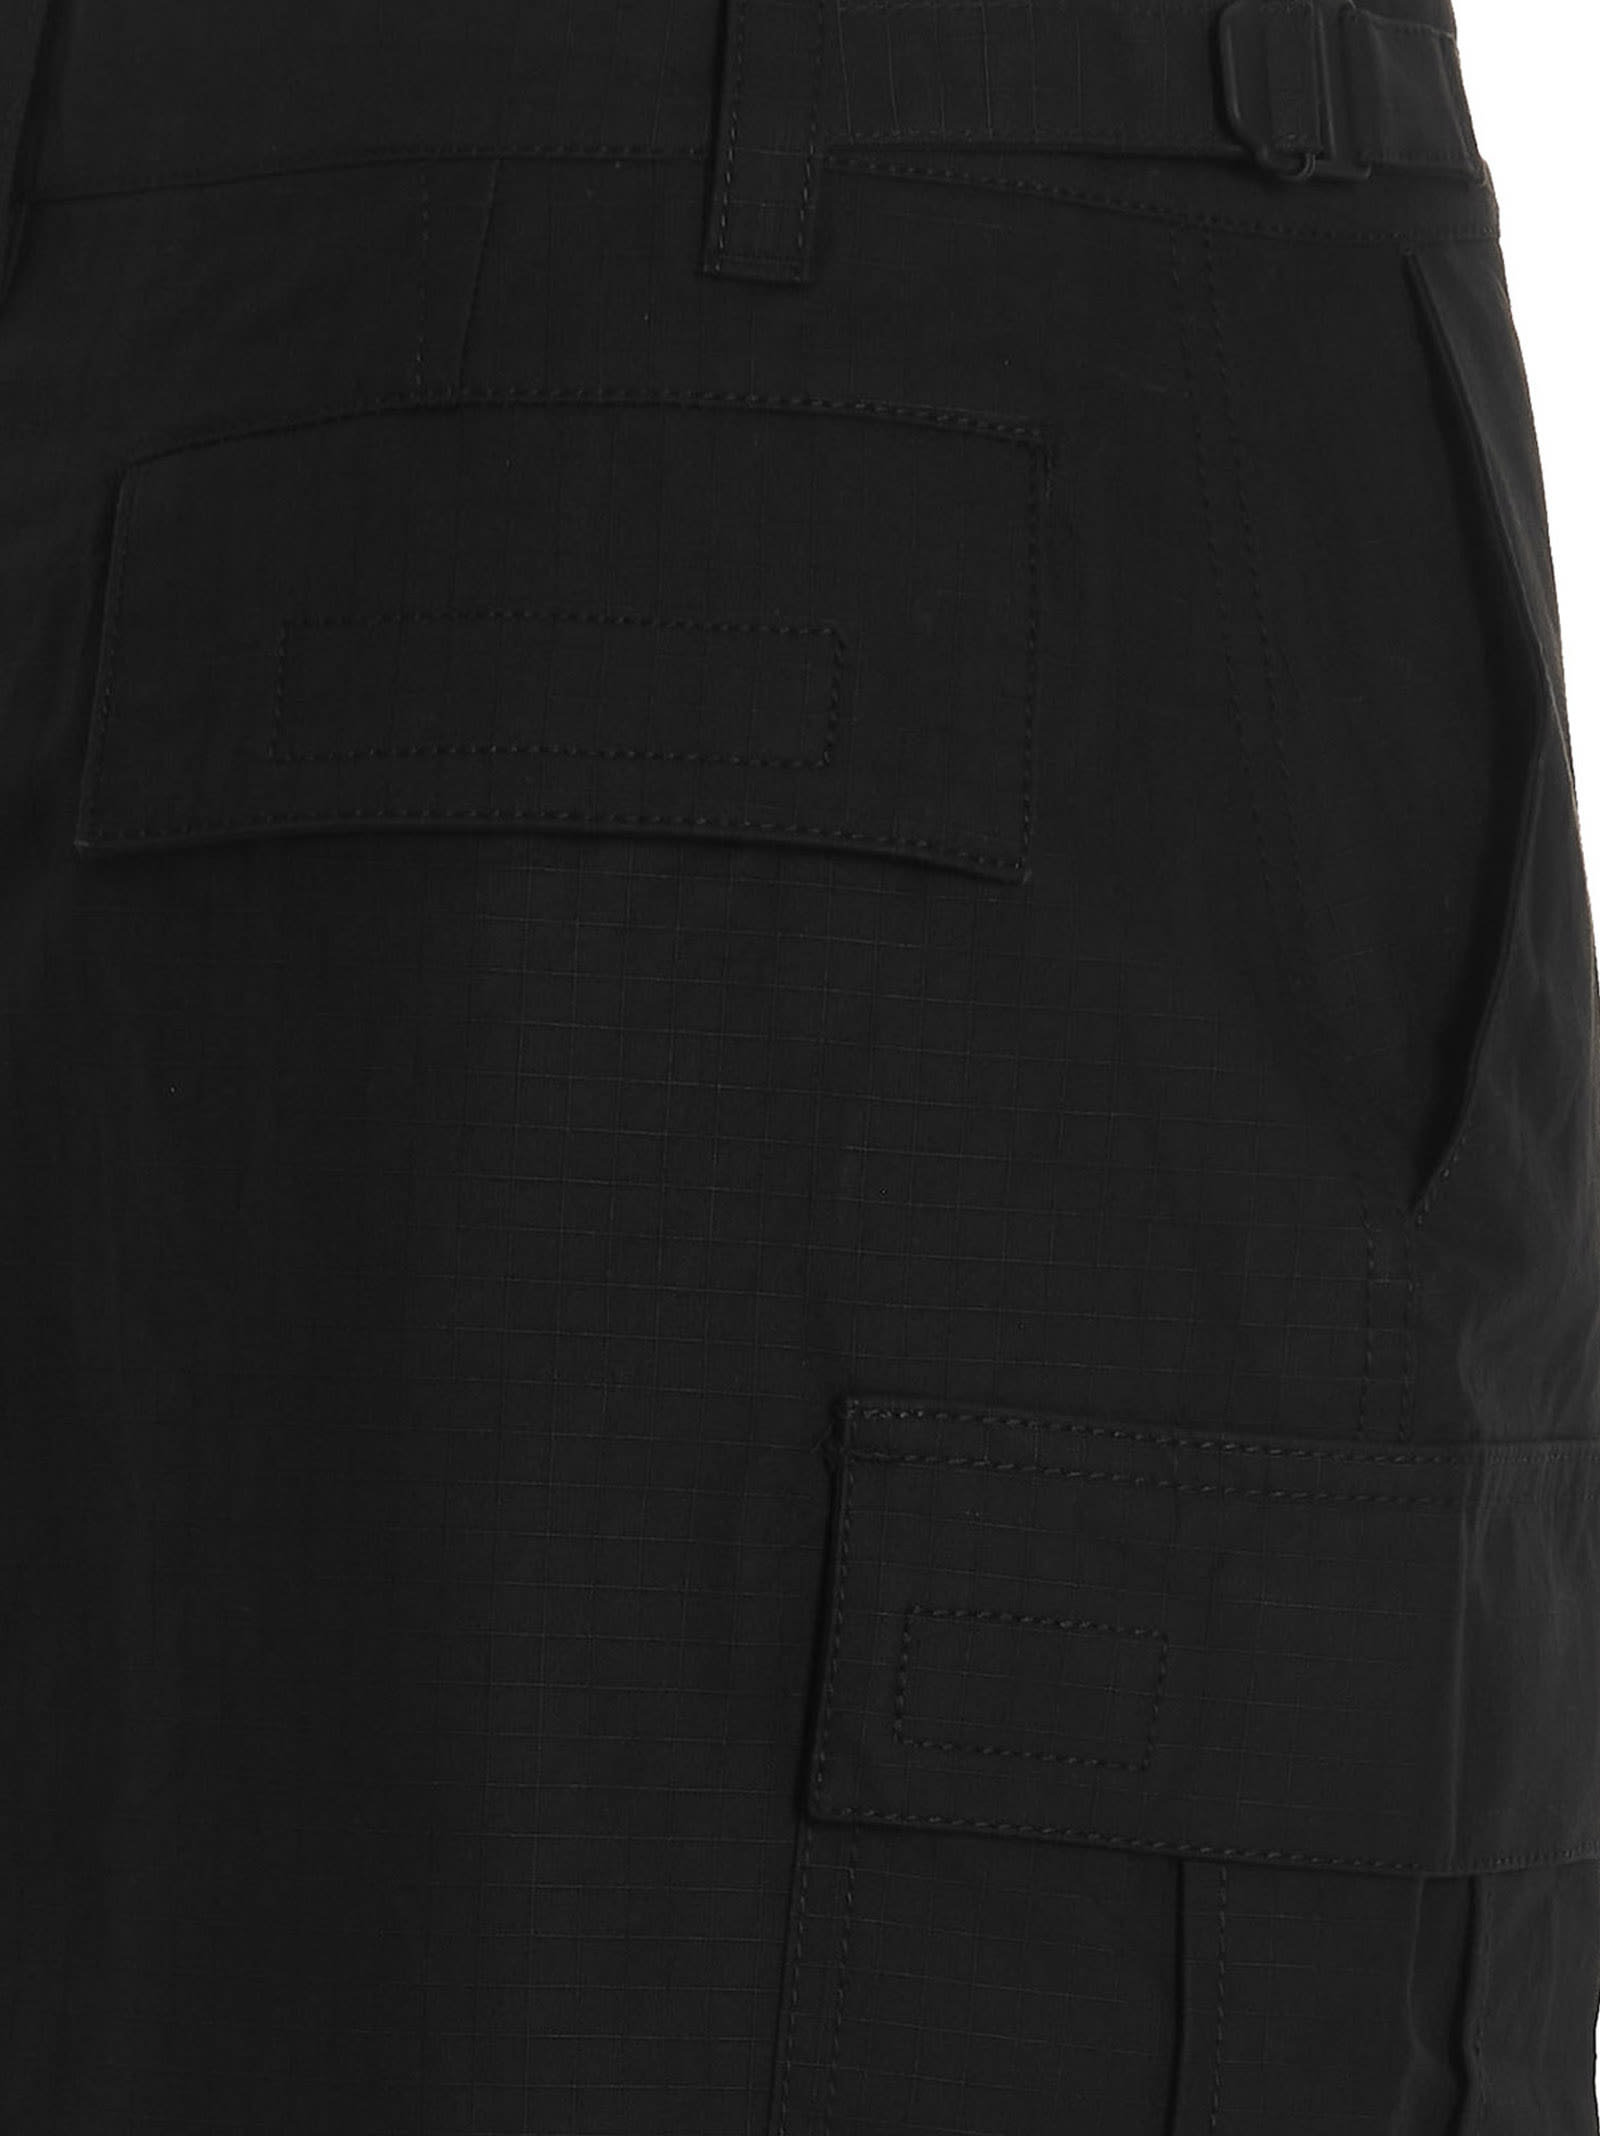 Shop Wardrobe.nyc Cargo Midi Skirt In Black